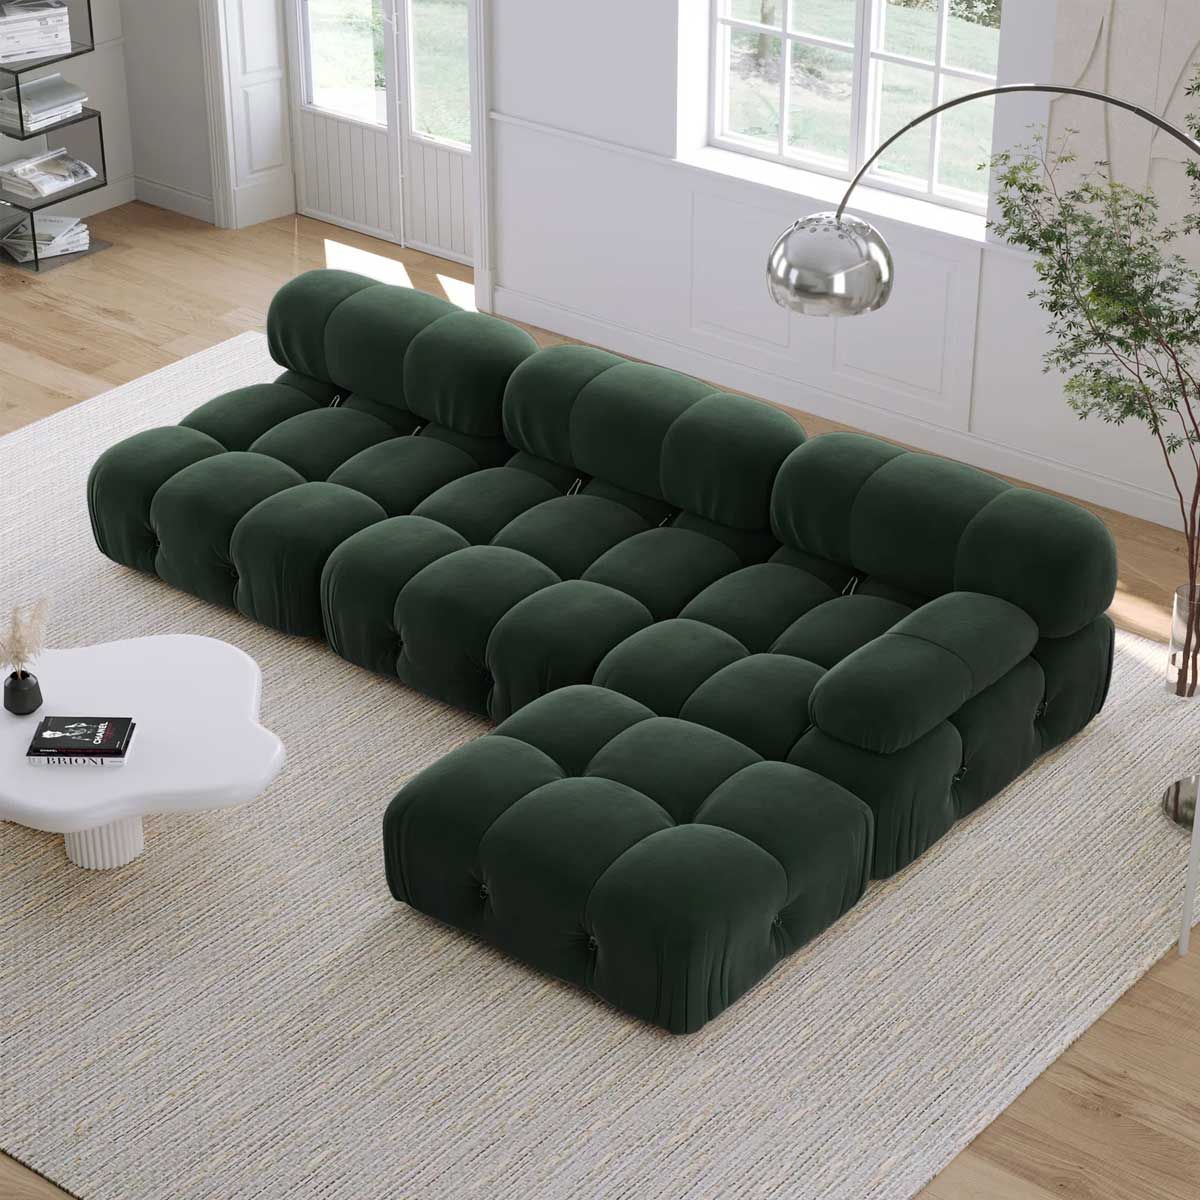 Delsea Modular Sectional Sofa In Green Velvet From Aed 4849 | Atoz Furniture Inside Green Velvet Modular Sectionals (Photo 11 of 15)